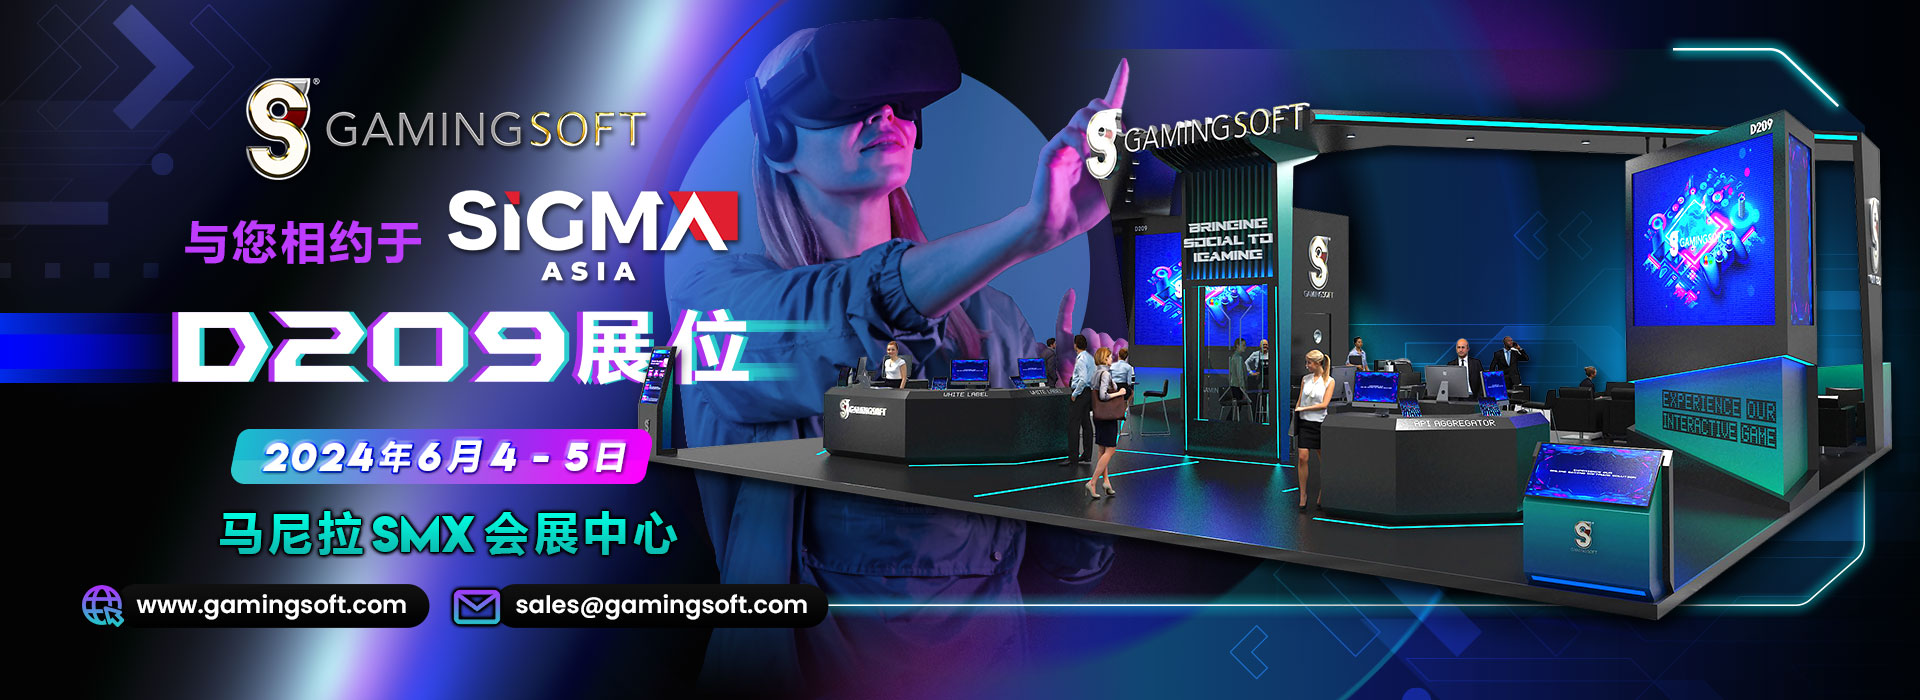 Sigma Asia 2024 与你相约于 D209 展位 网页横幅 - 乐游国际GamingSoft